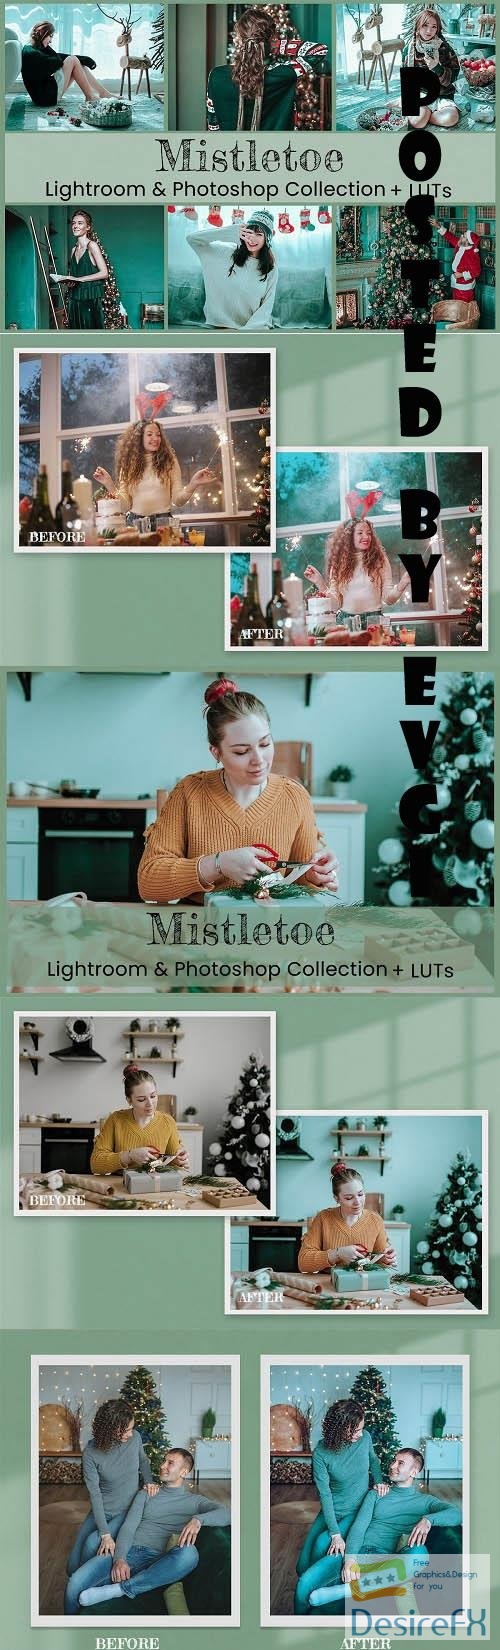 Mistletoe Lightroom Mobile Presets Photoshop Actions LUTs - 1618018